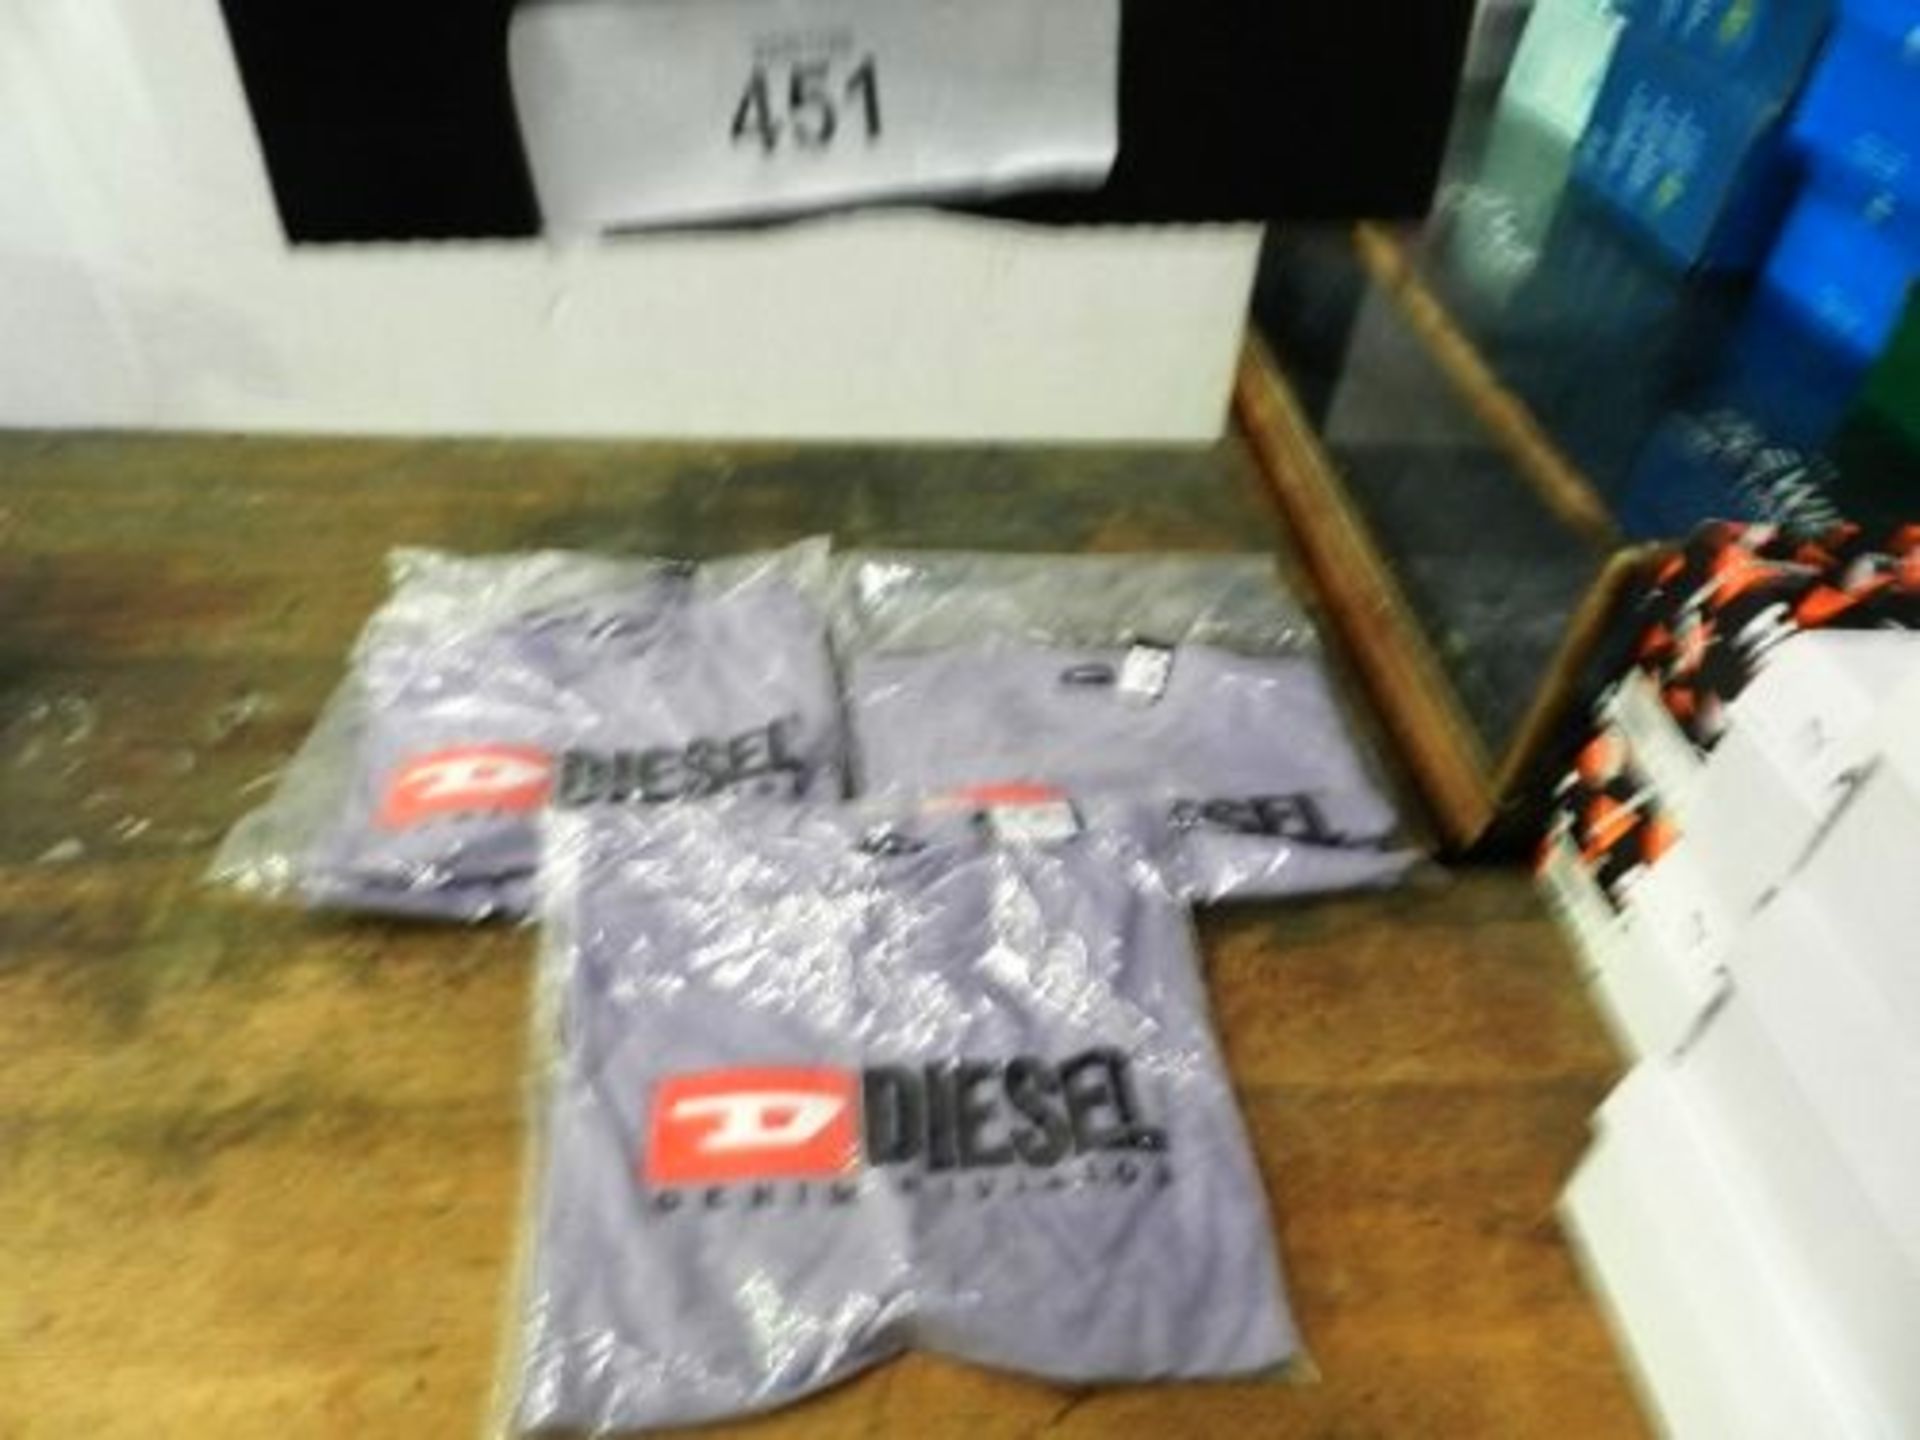 3 x Diesel Division t-shirts, size M, RRP £50.00 each - New (C14E)